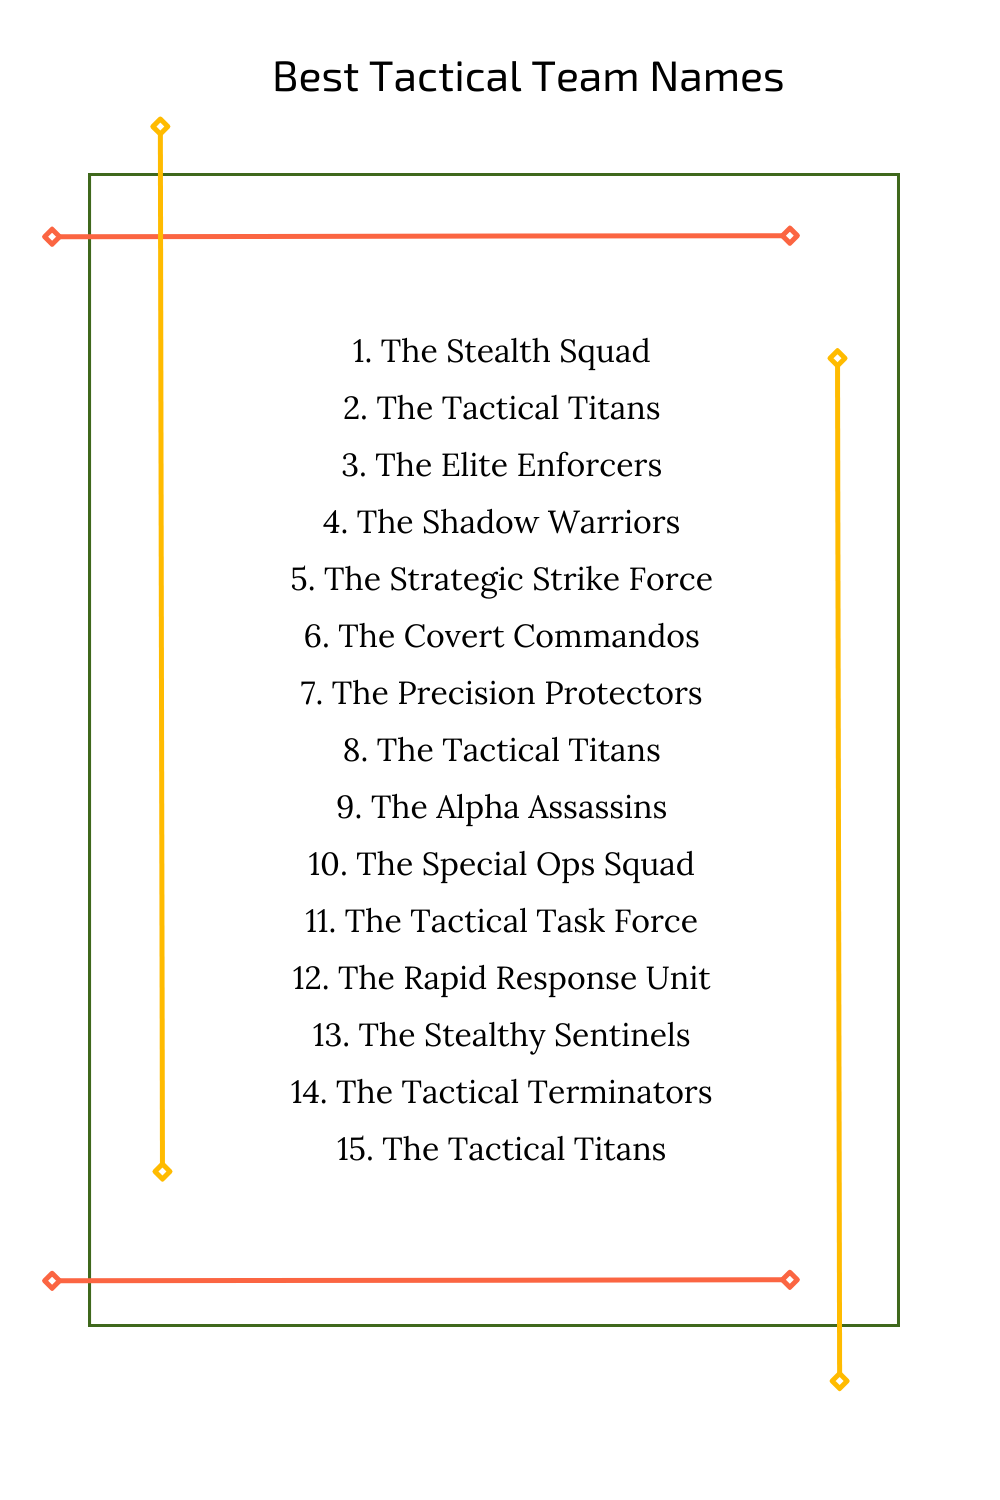 Best Tactical Team Names